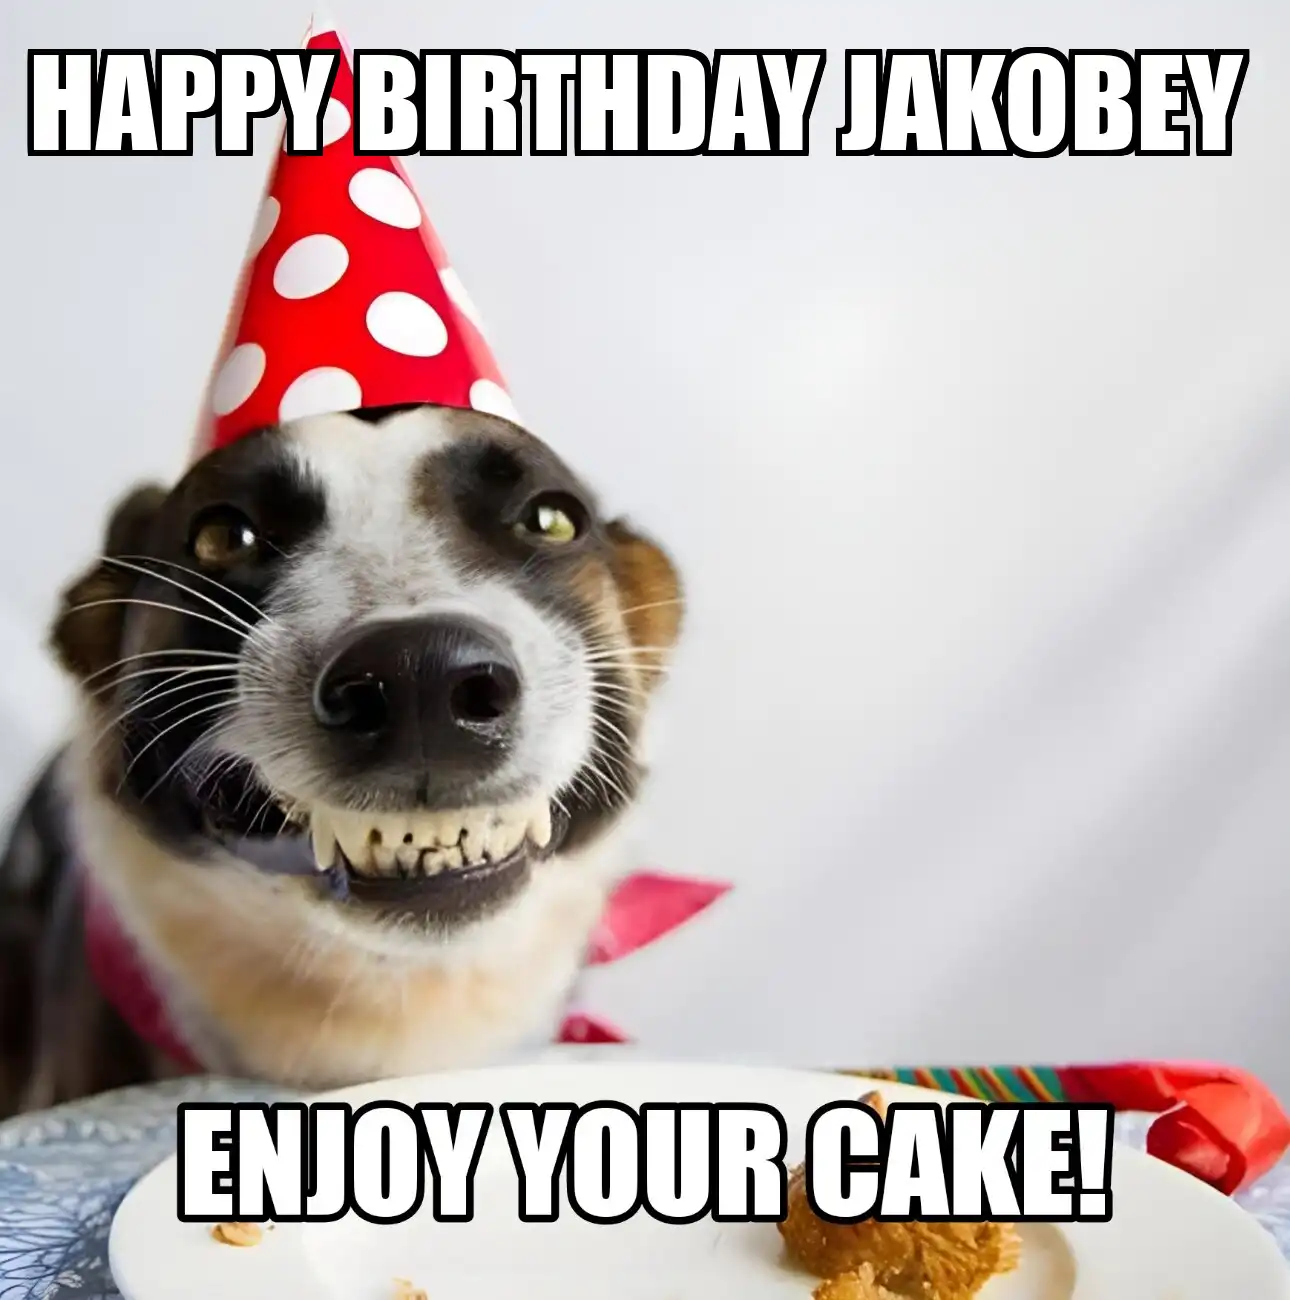 Happy Birthday Jakobey Enjoy Your Cake Dog Meme